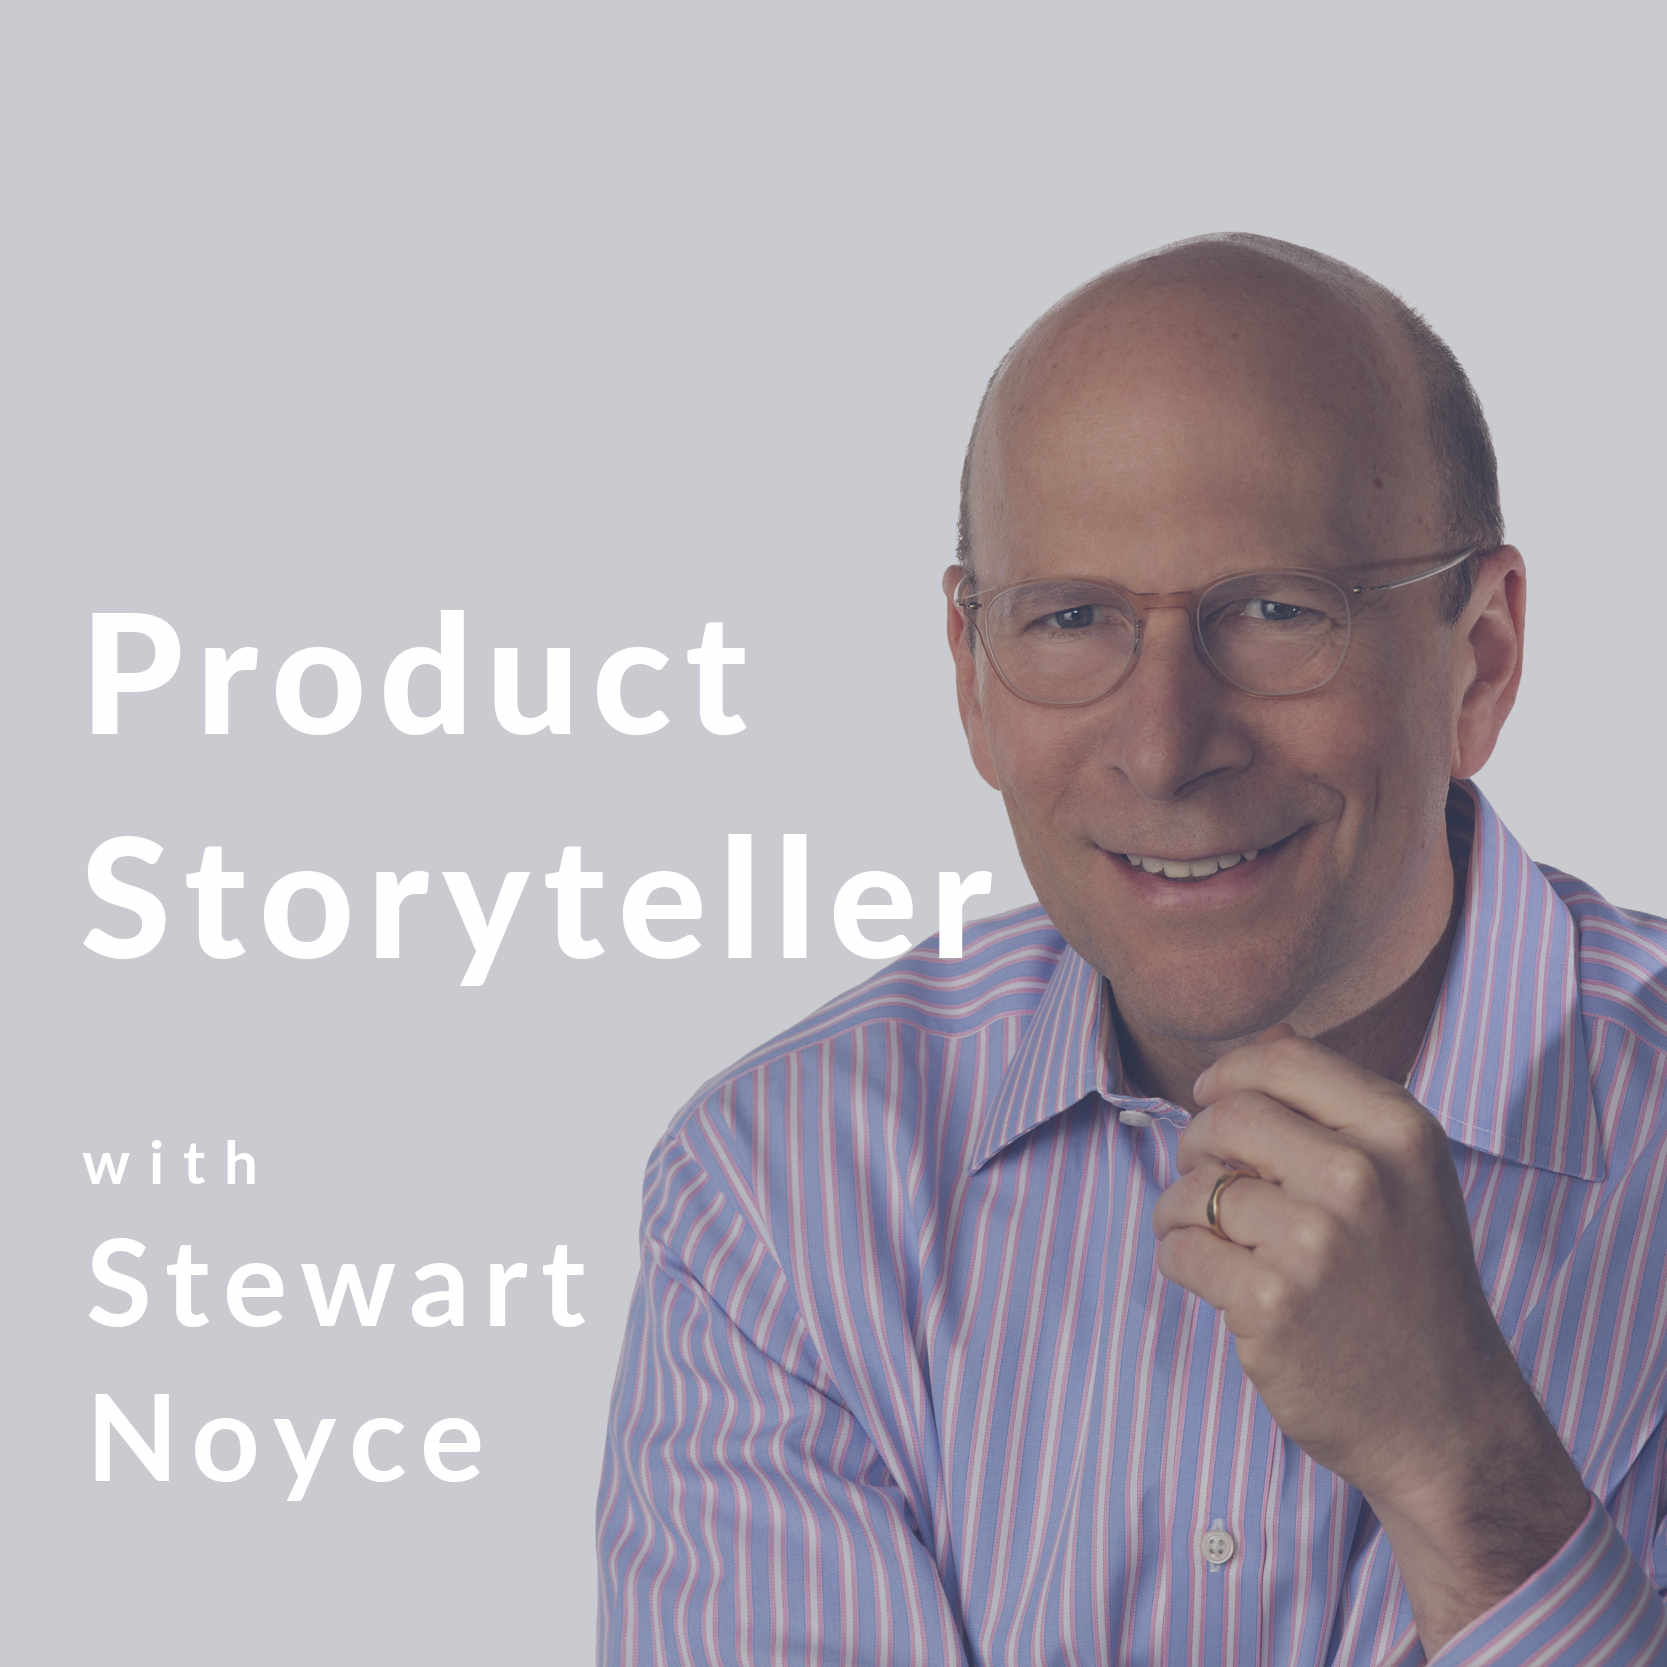 Product Storyteller with Stewart Noyce